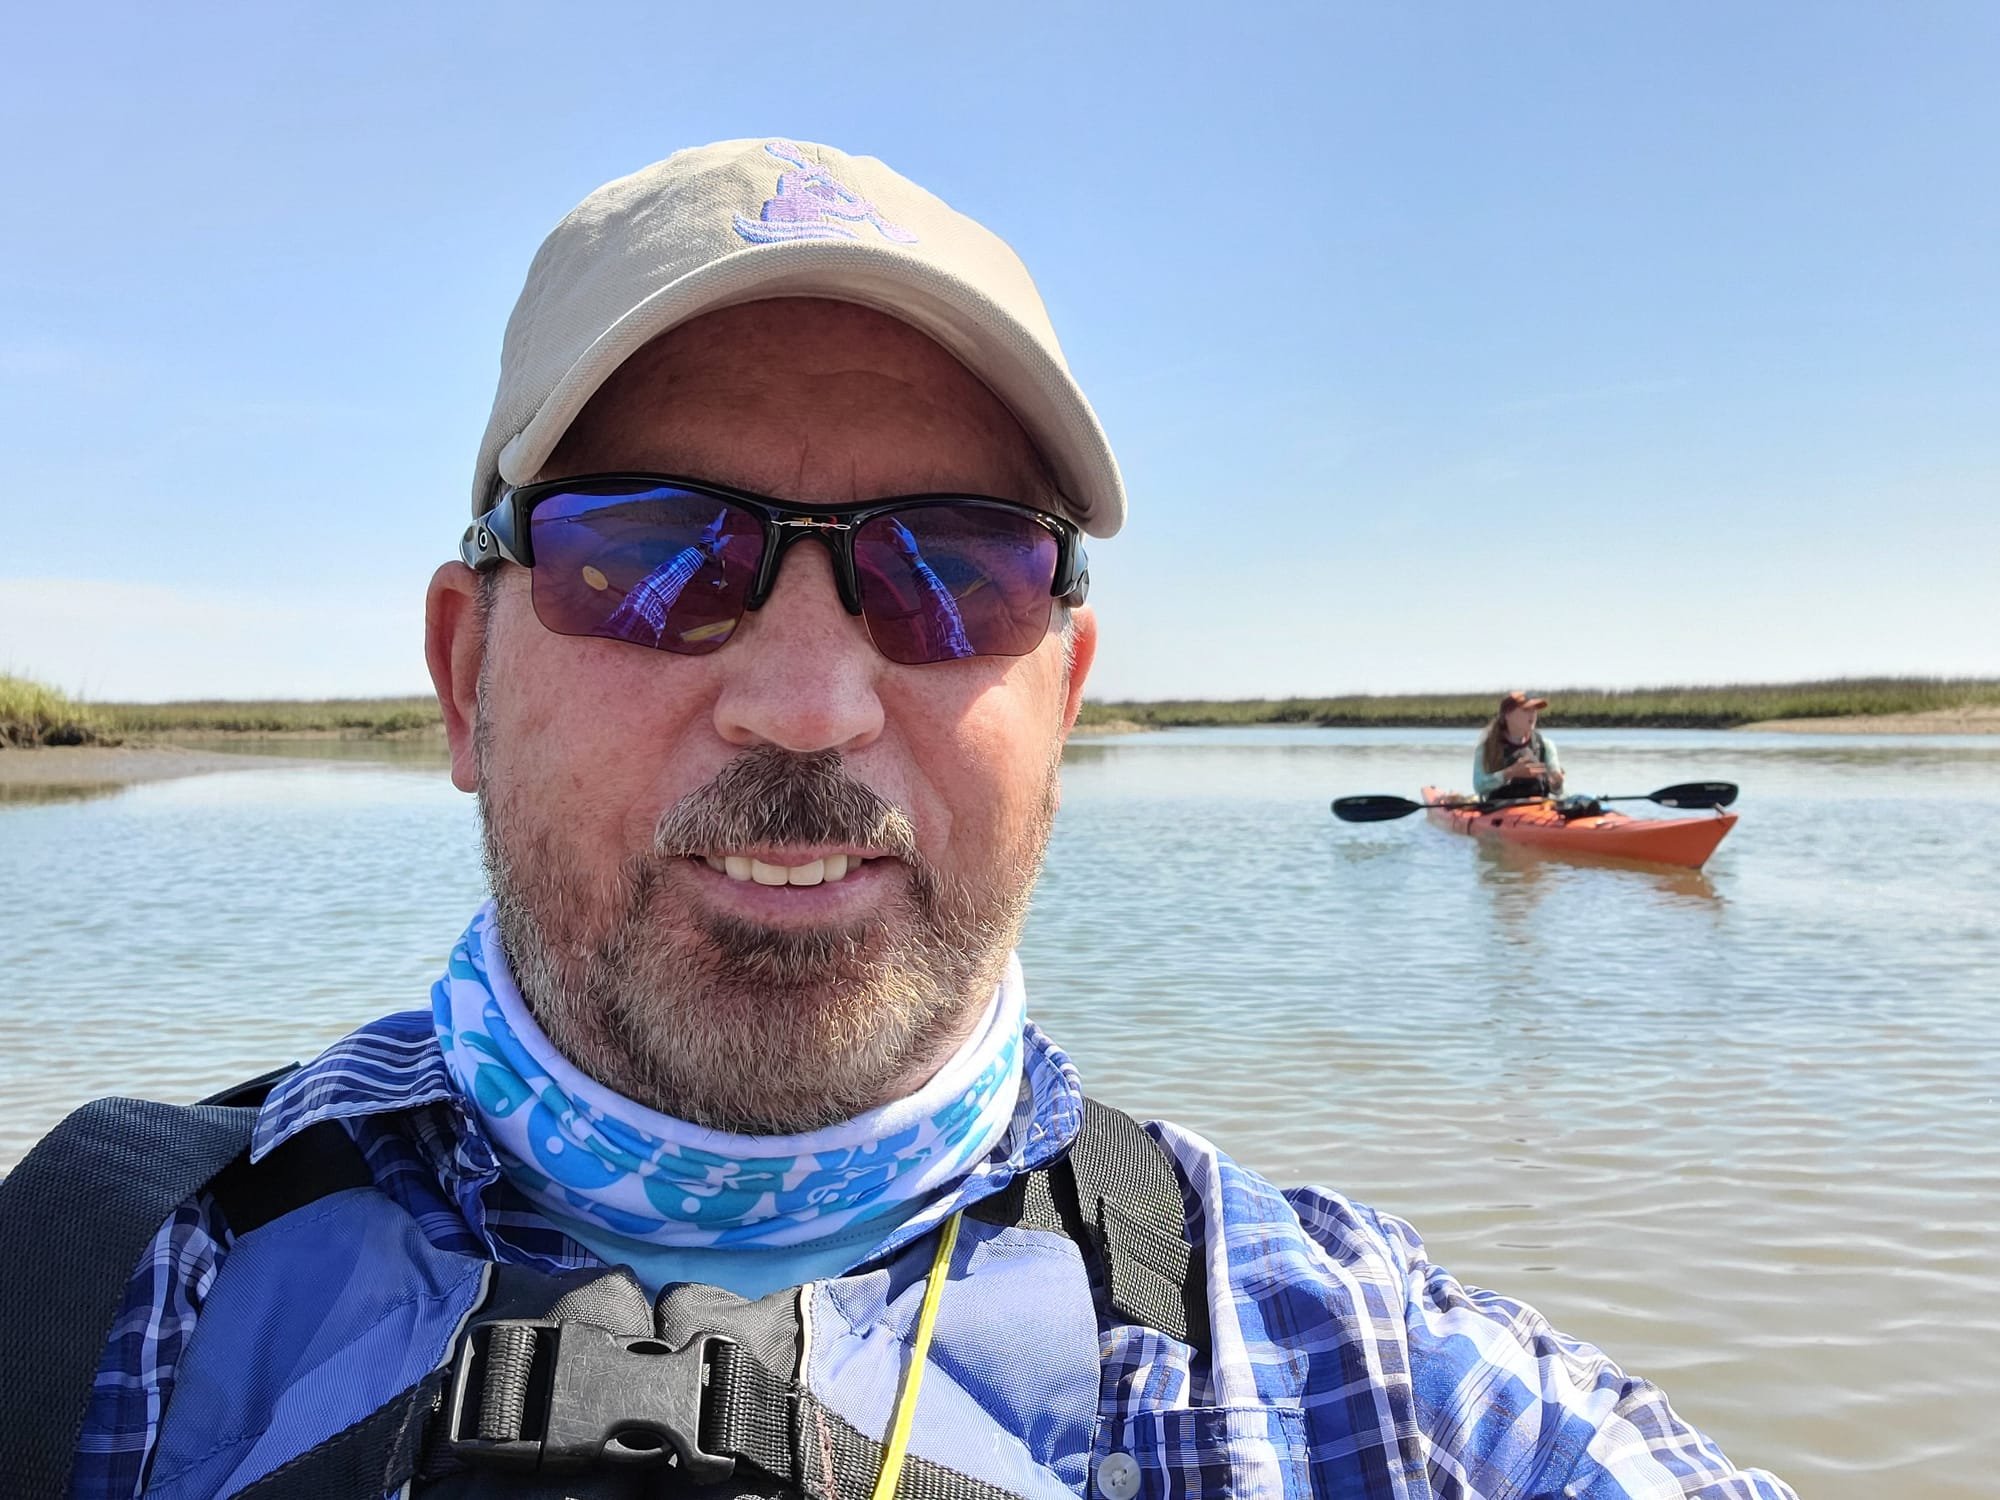 REI Trip: Kayaking estuaries on the way to Bulls Island